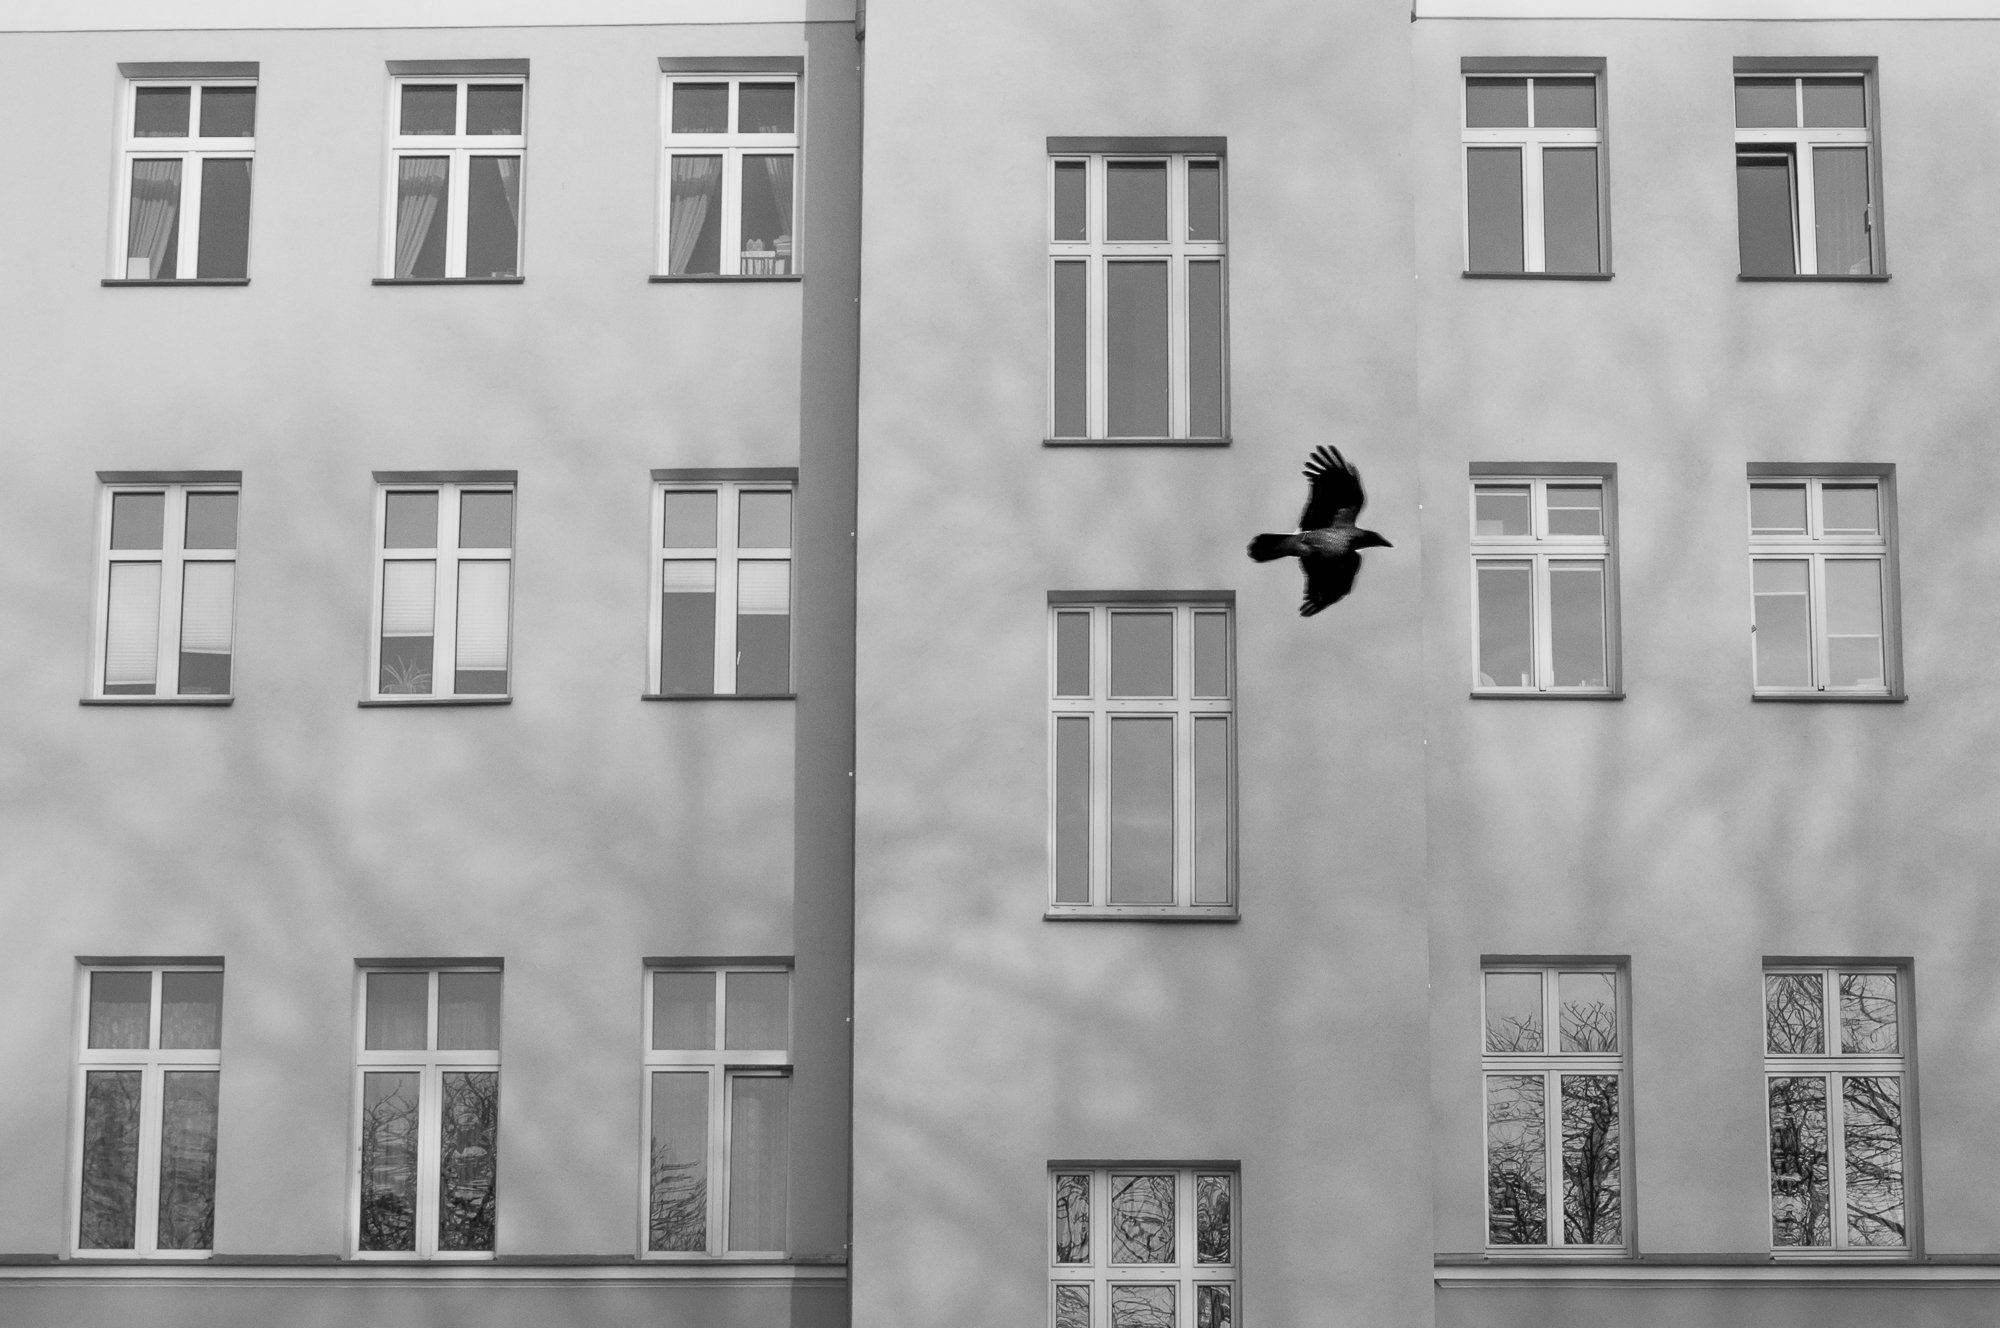 Adam Mazek Photography Warsaw (Warszawa) 2017. Post: "About "Diaries." Minimalism. Flying bird.